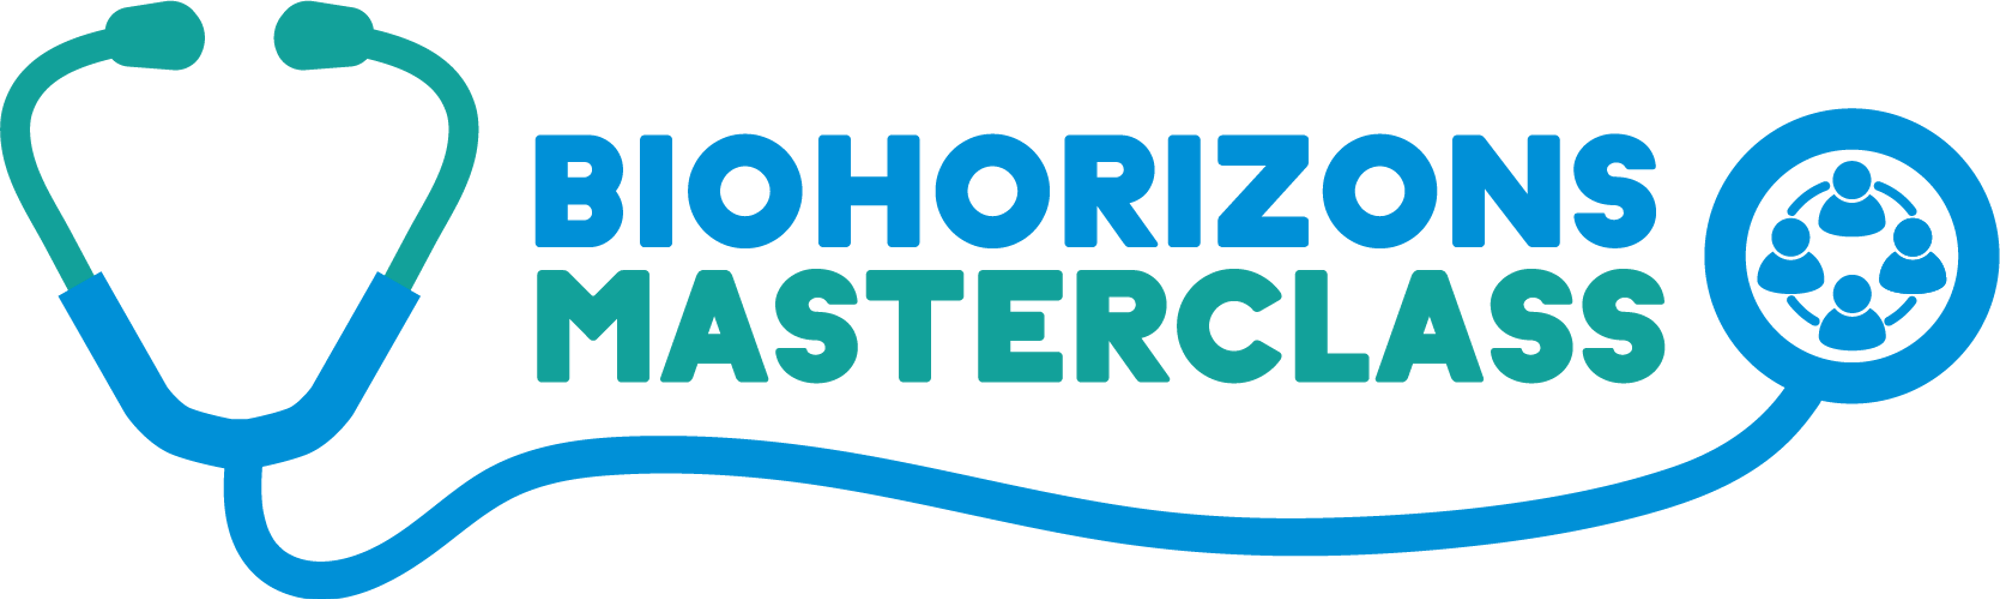 Biohorizons Masterclass Logo V3final (1)